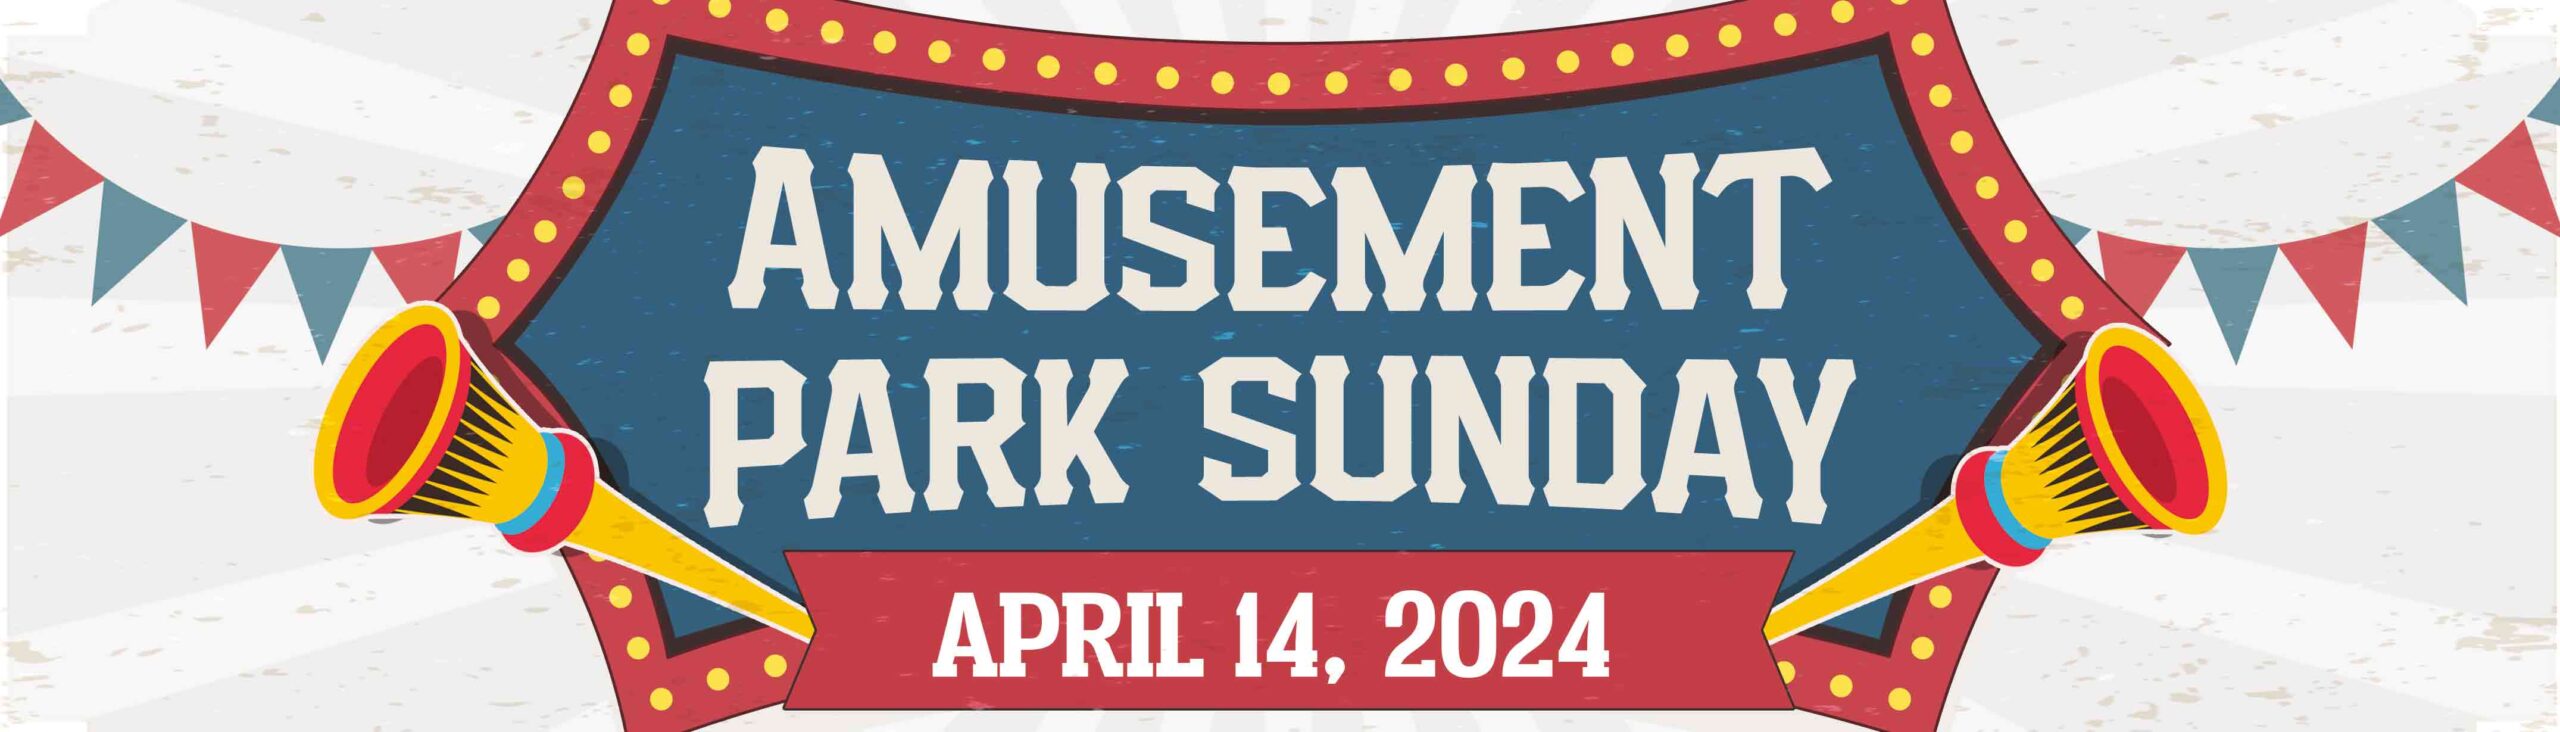 Amusement Park Sunday 2024